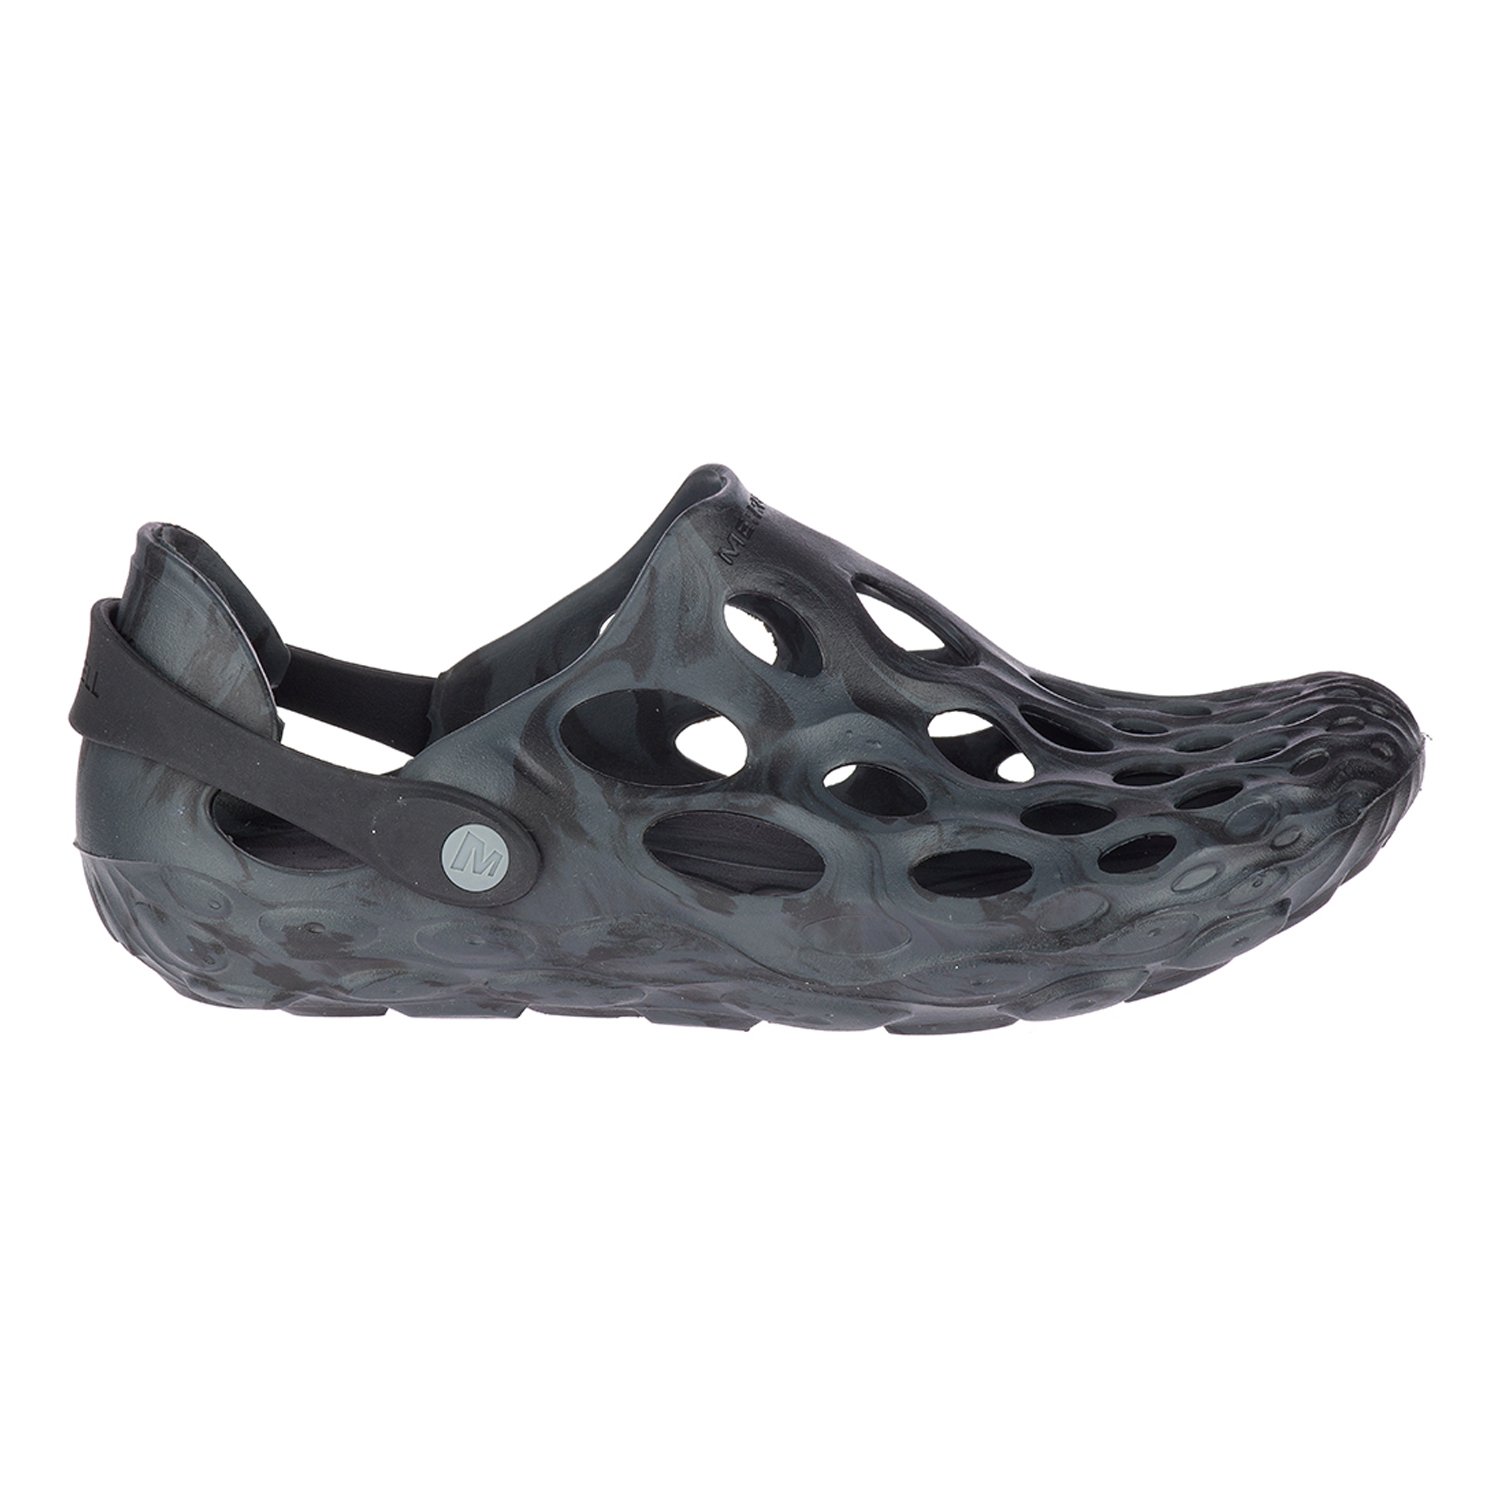 Merrell Hydro Moc Kadın Su Ayakkabısı - Siyah - 1